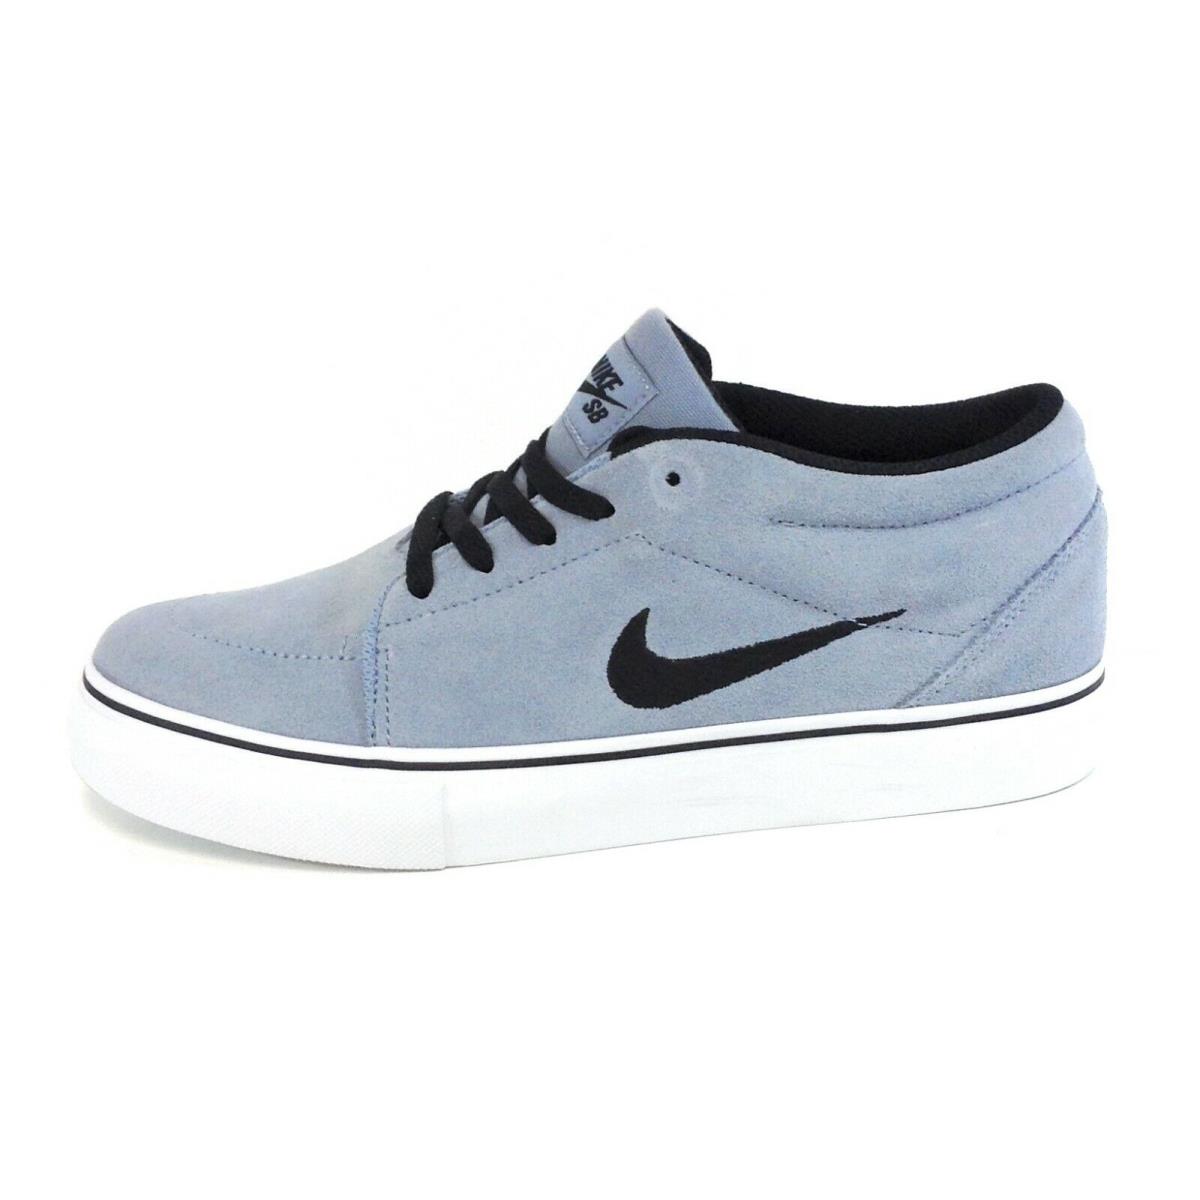 Boys Kids Youth Nike SB Satire Mid 684809 001 Magnet Grey Black Sneakers Shoes - Grey